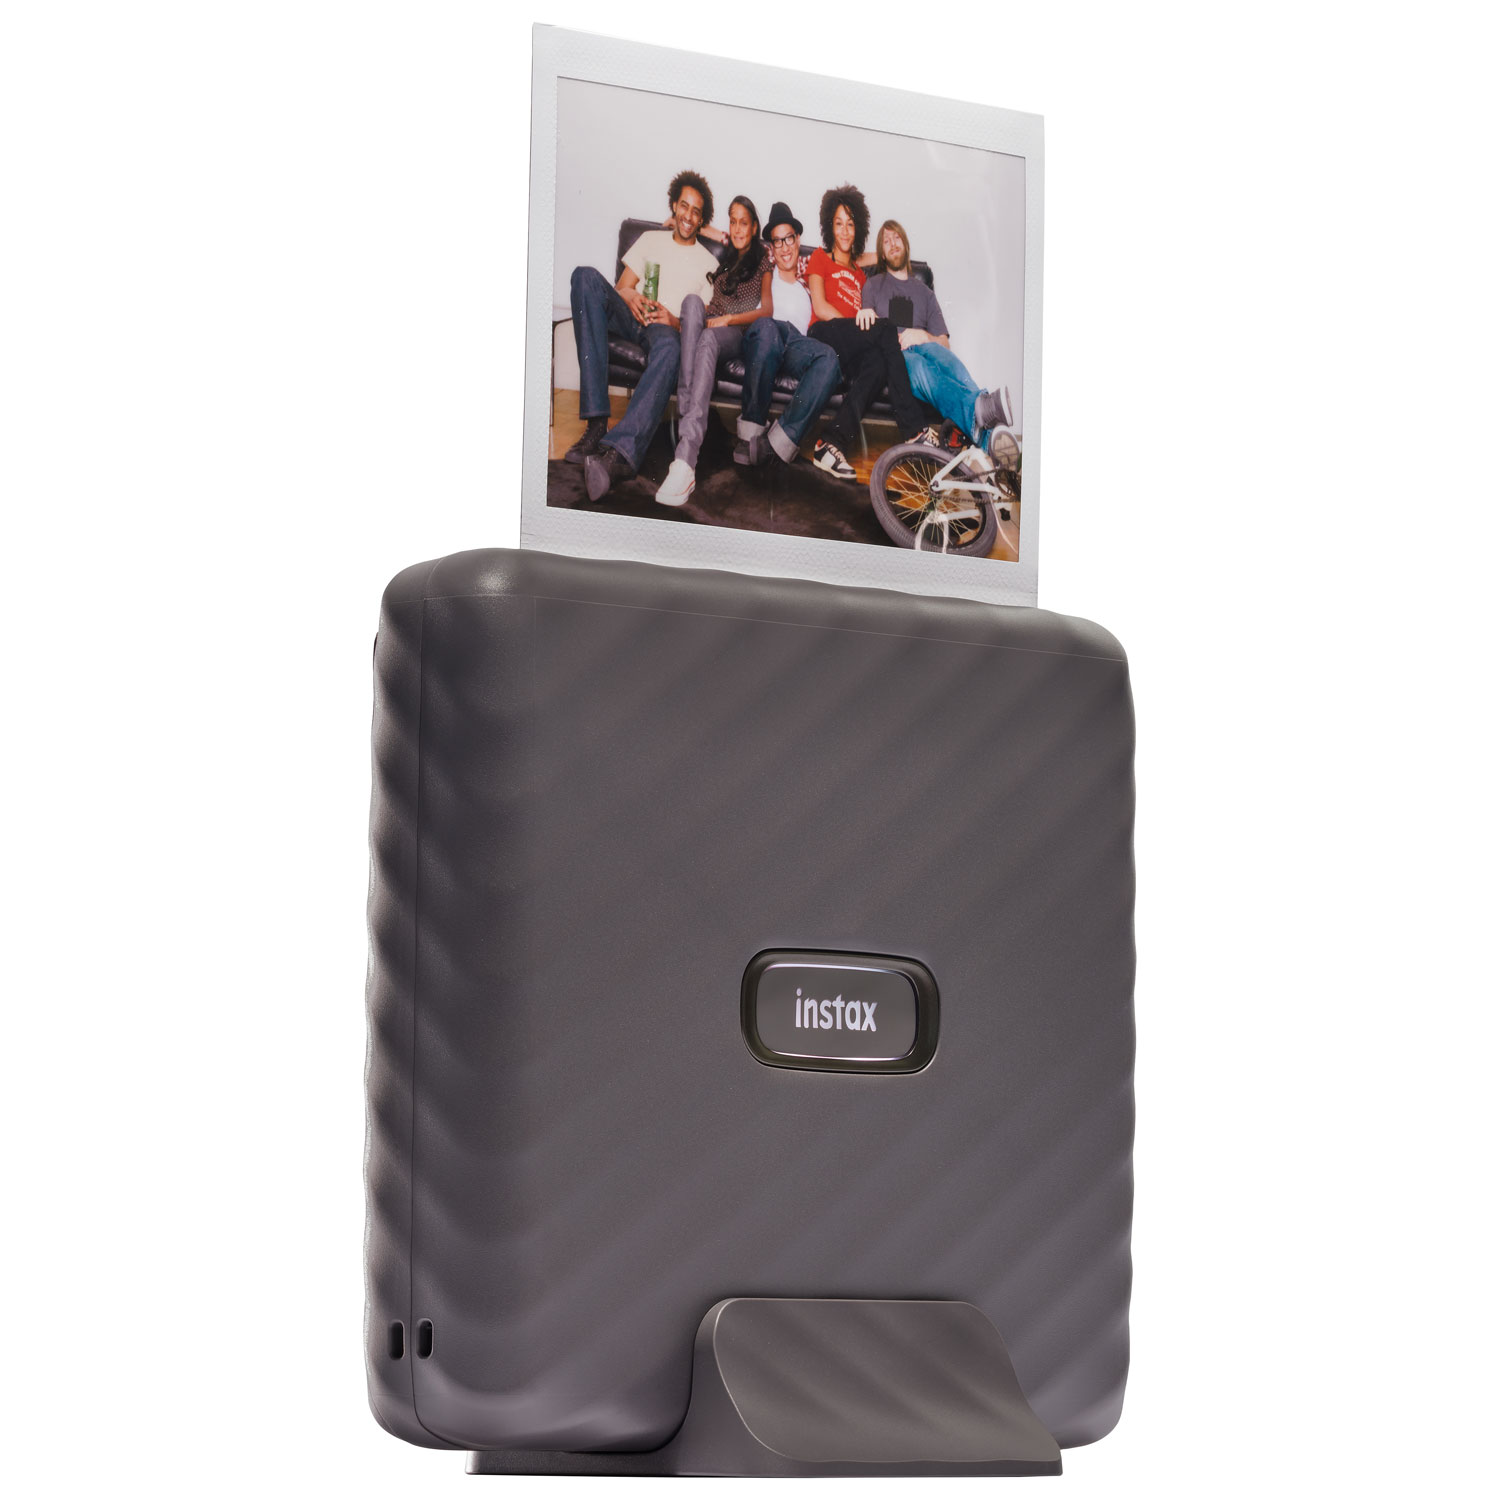 Fujifilm Instax link wide imprimante smartphone gris moka + kit  d'accessoires film